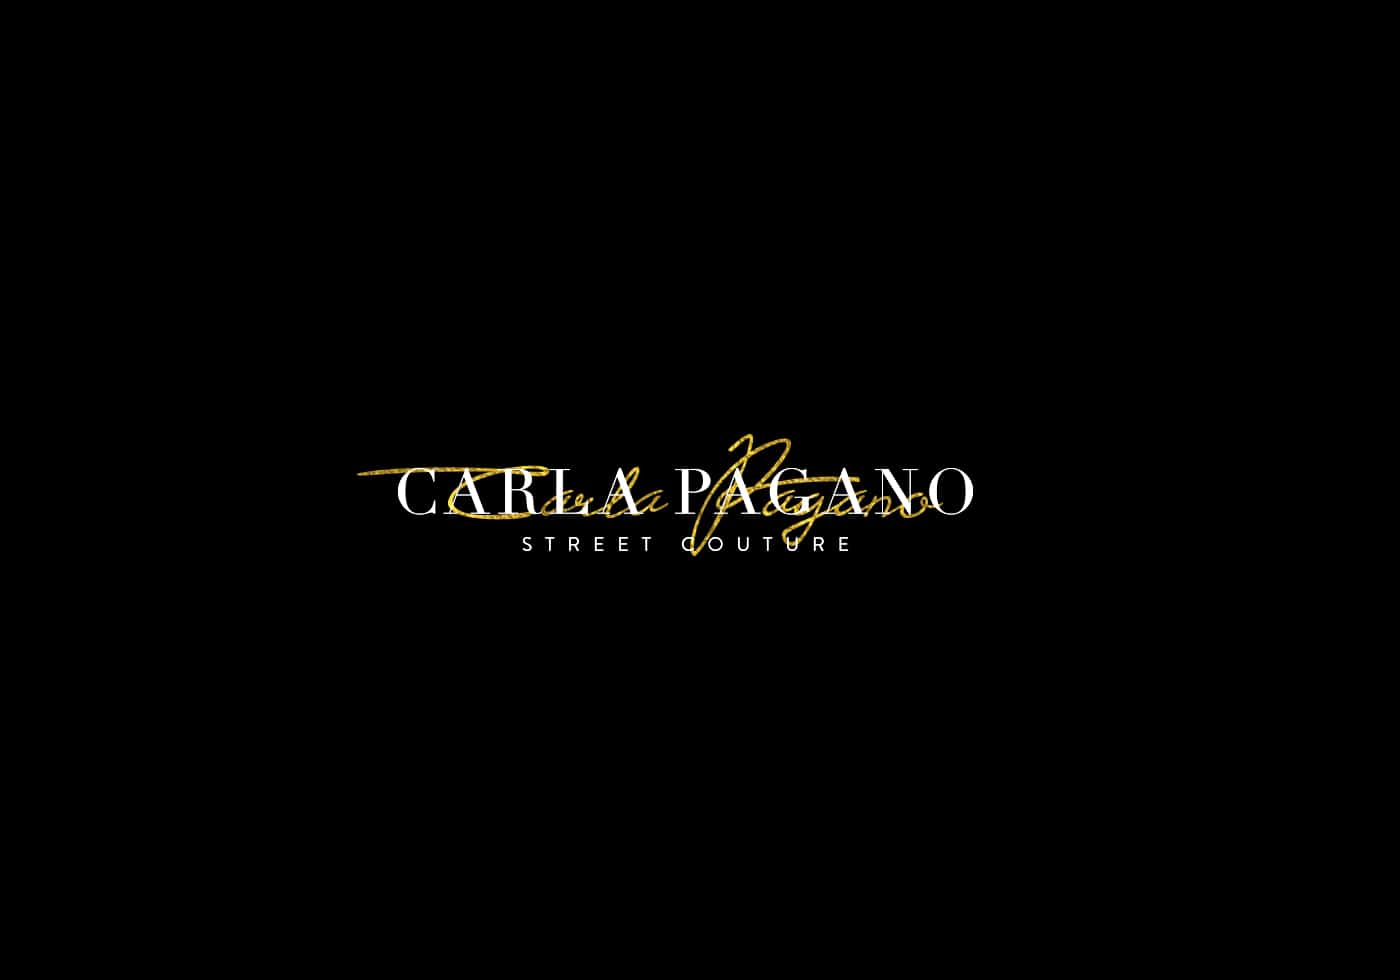 Carla Pagano - Street Couture